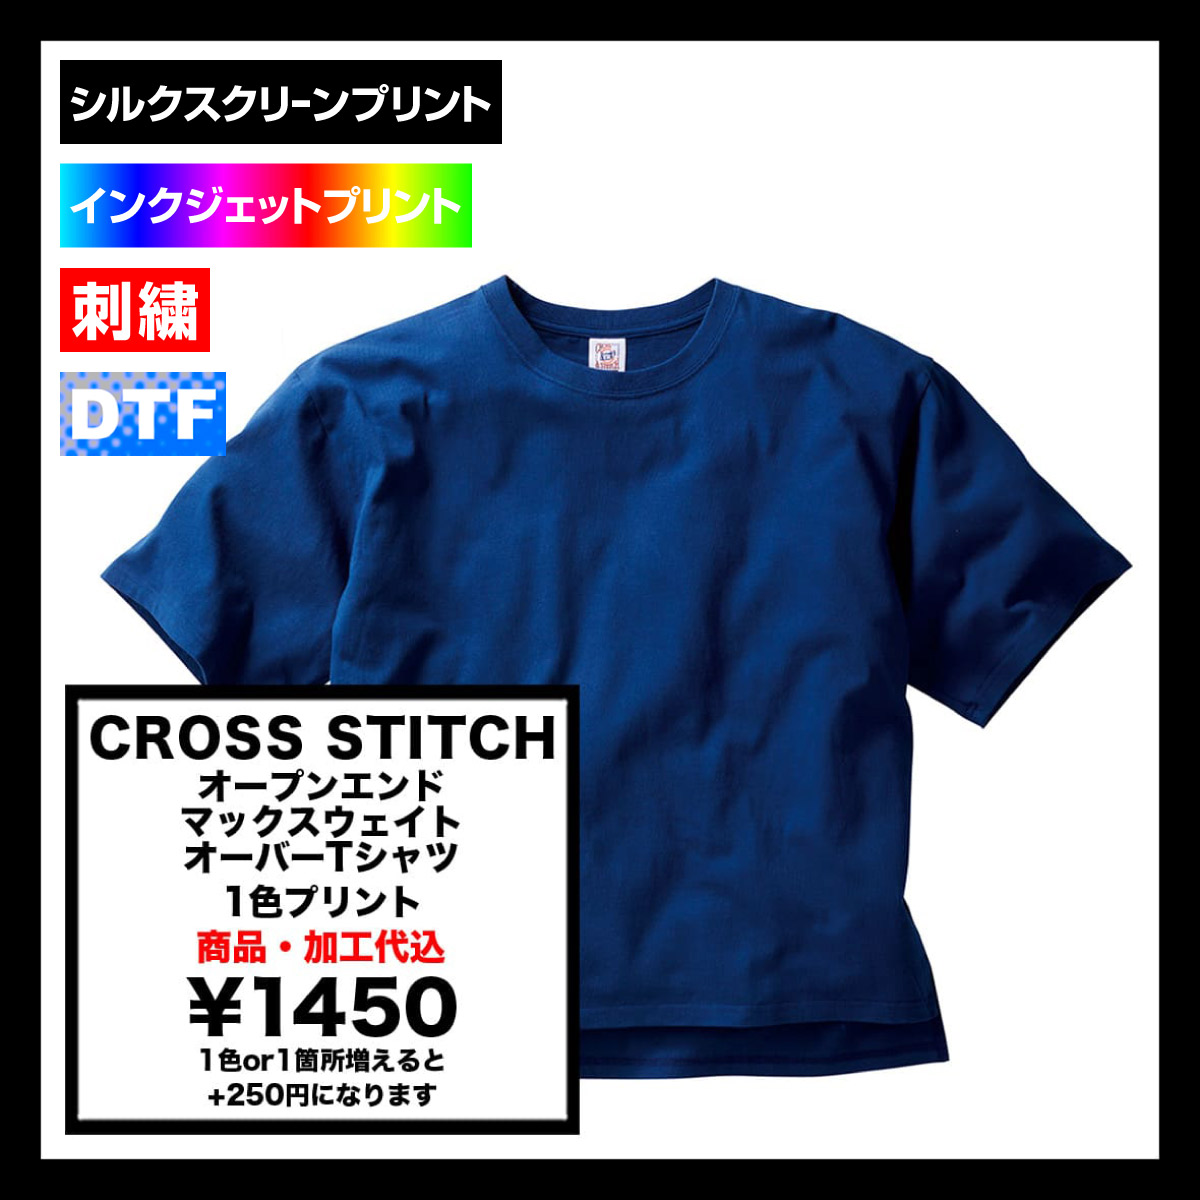 CROSS STITCH クロススティッチ 6.2 oz オープンエンド マックスウェイト オーバーTシャツ (品番OE1401)